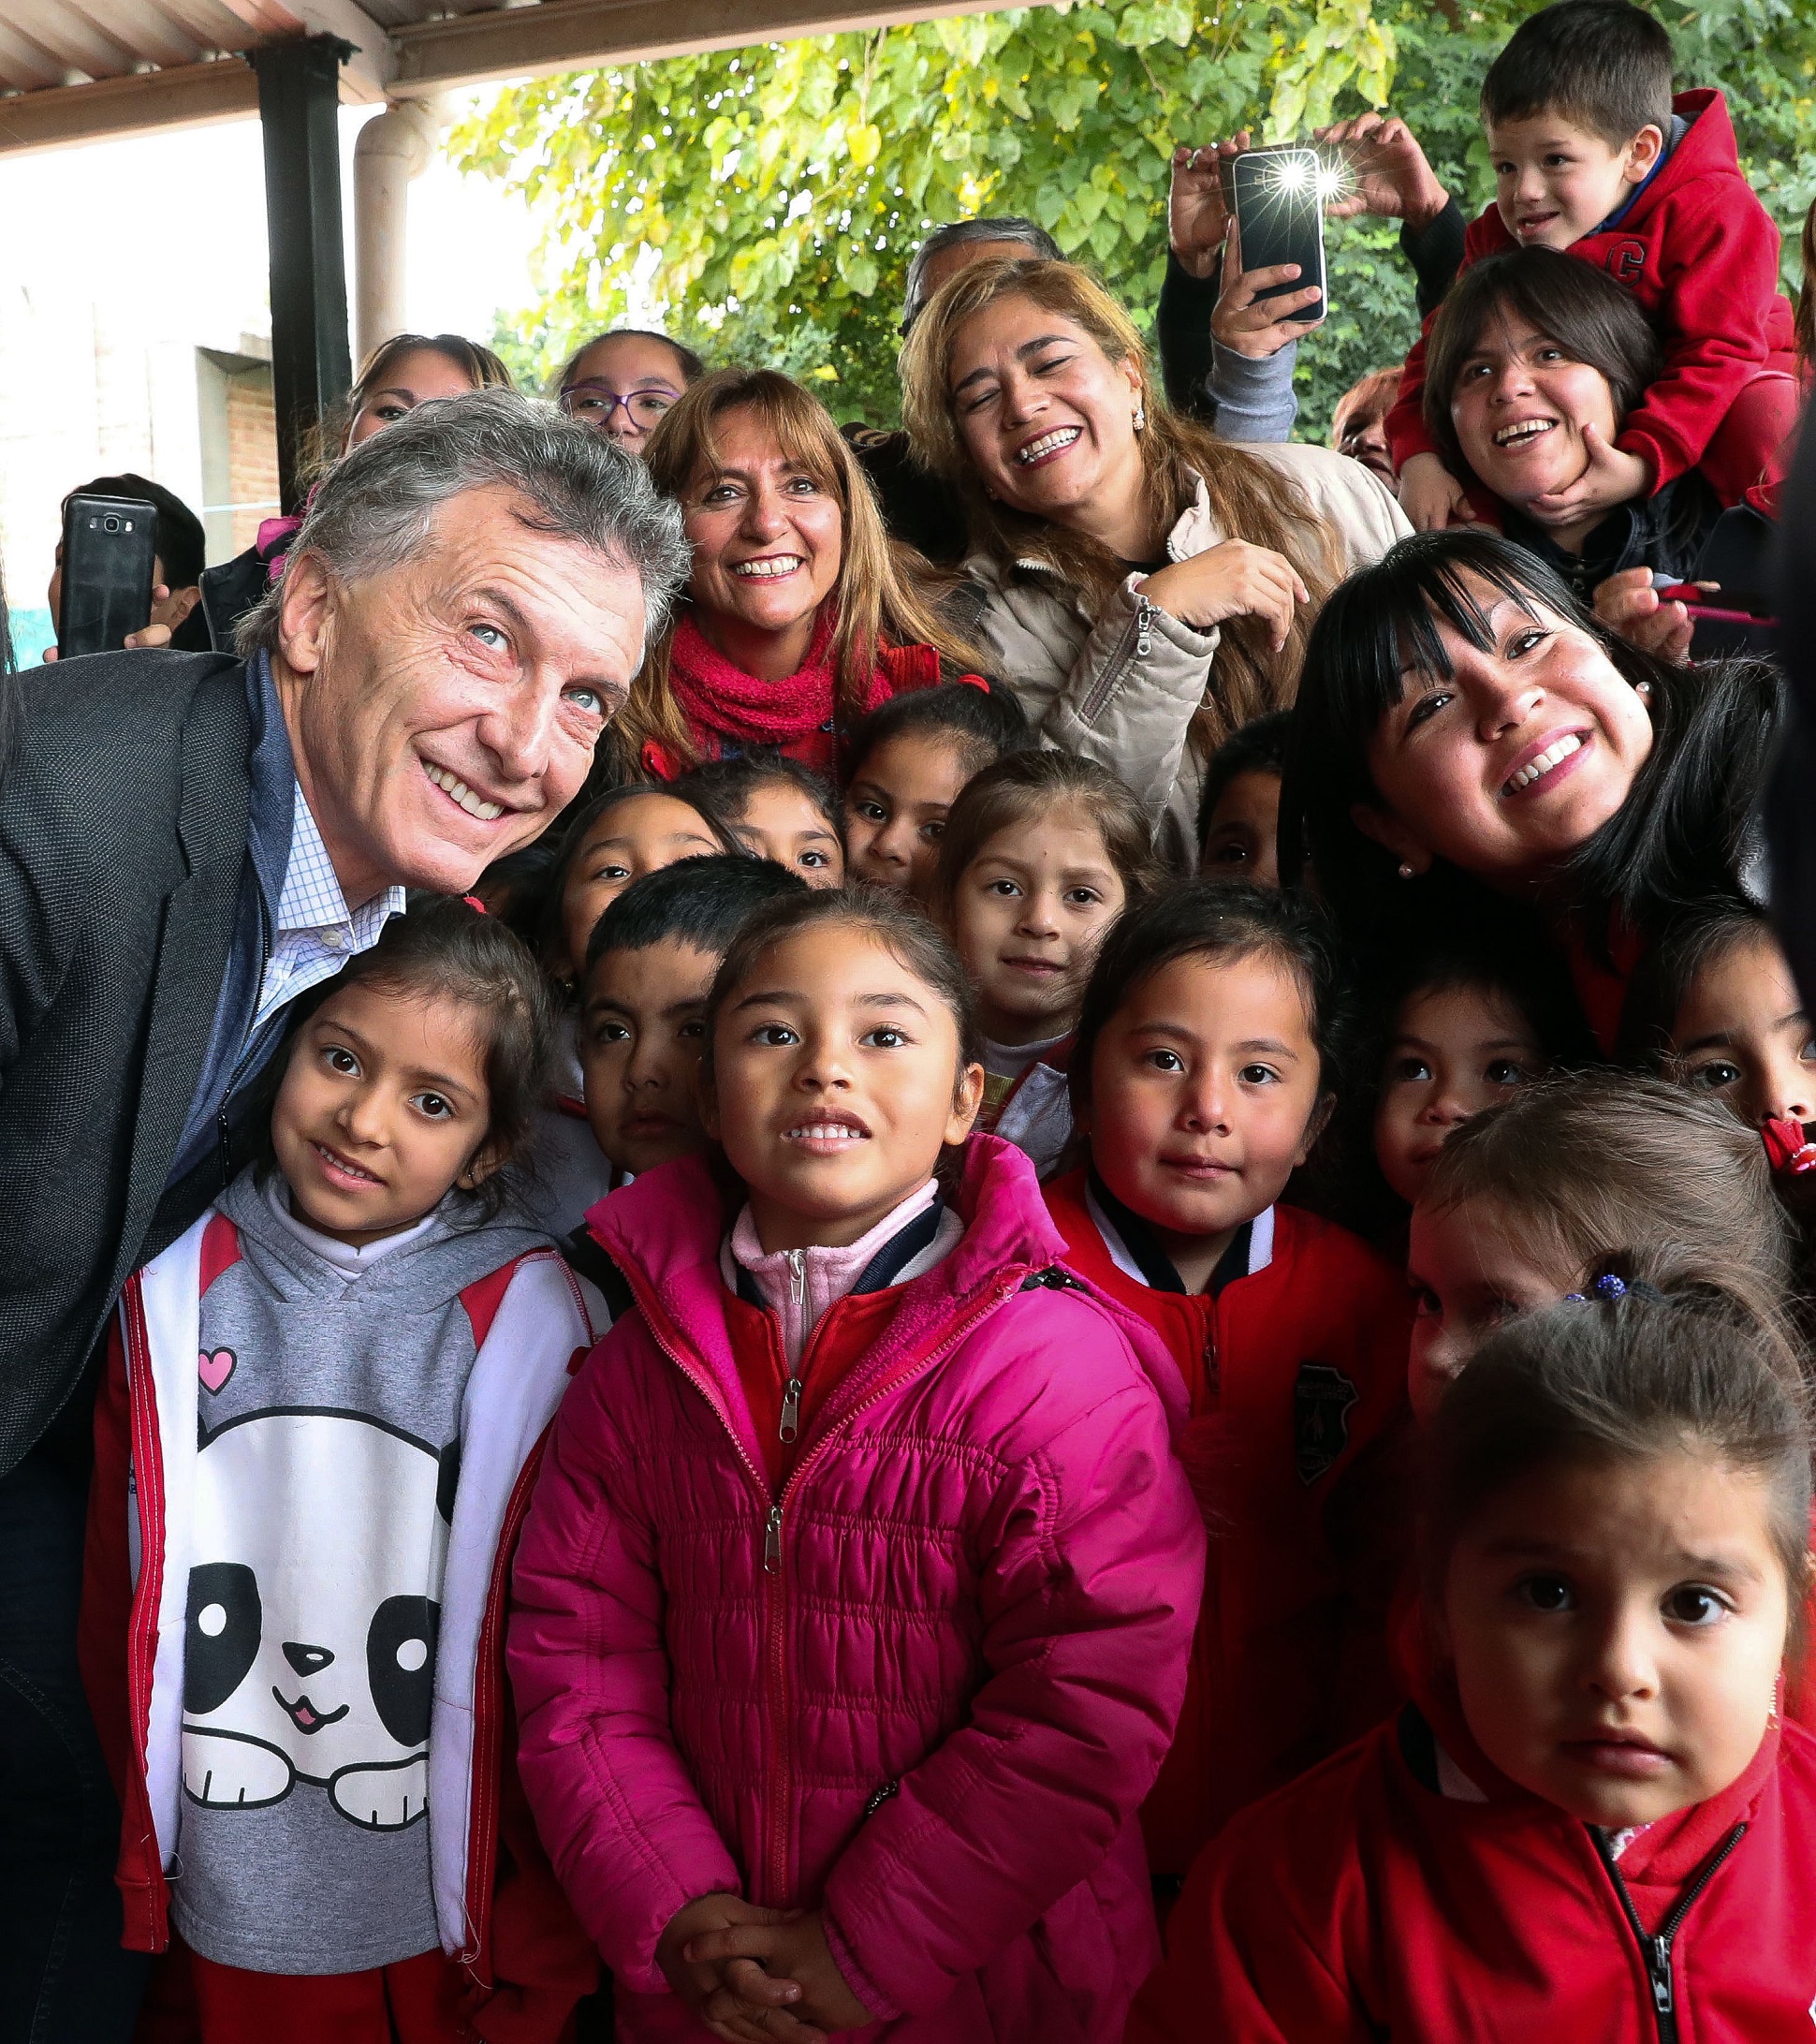 Macri: “Gobernar tiene que ser ayudar a crecer”